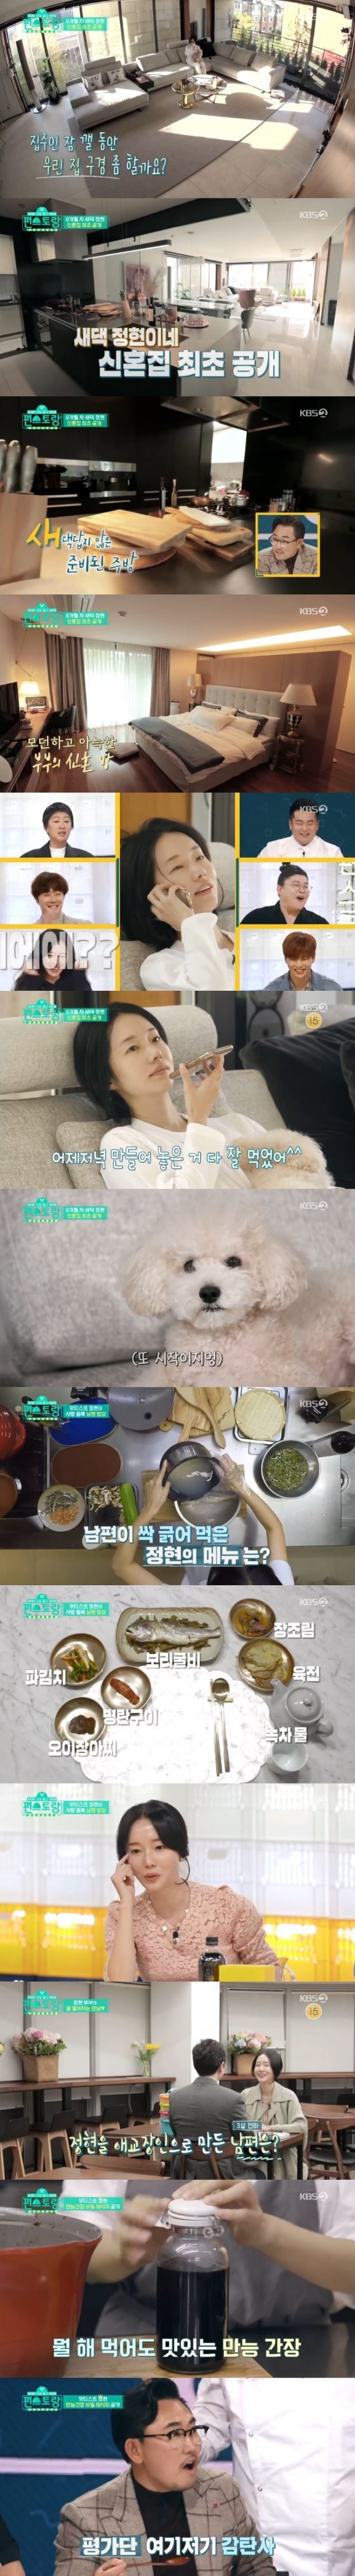 KBS 2TV ‘편스토랑’ 캡처 © 뉴스1